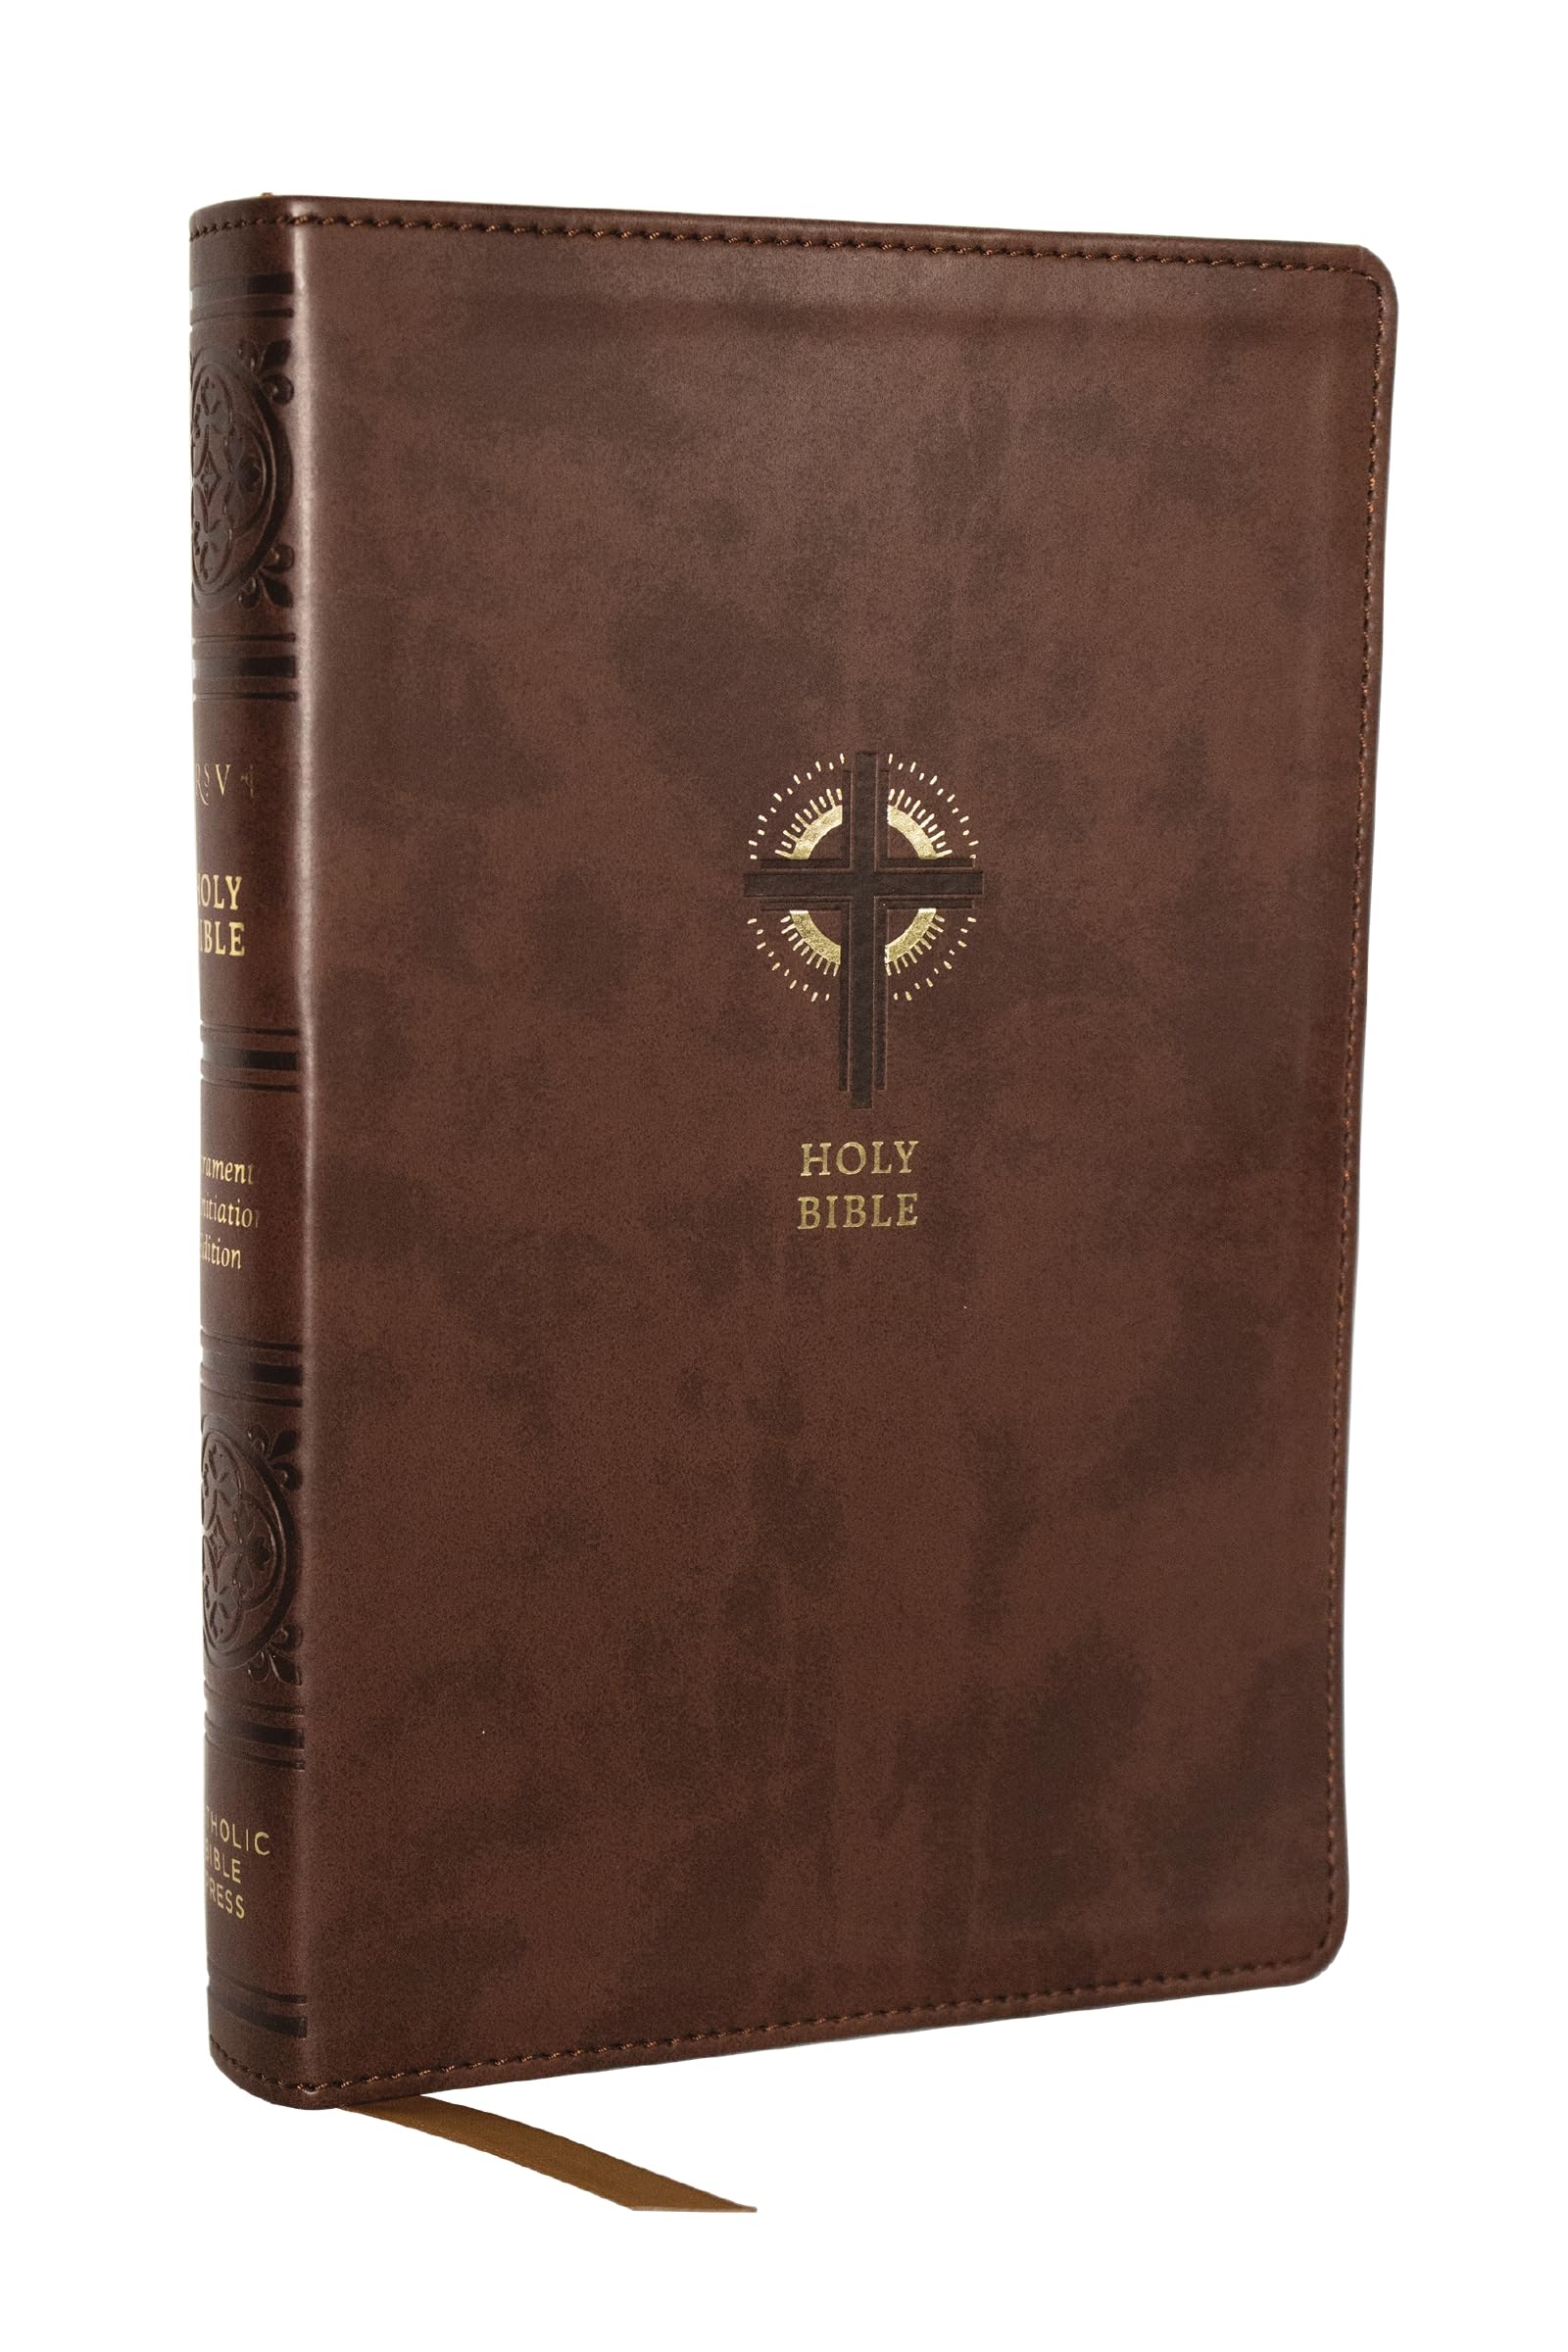 NRSVCE Sacraments of Initiation Catholic Bible, Brown Leathersoft, Comfort Print